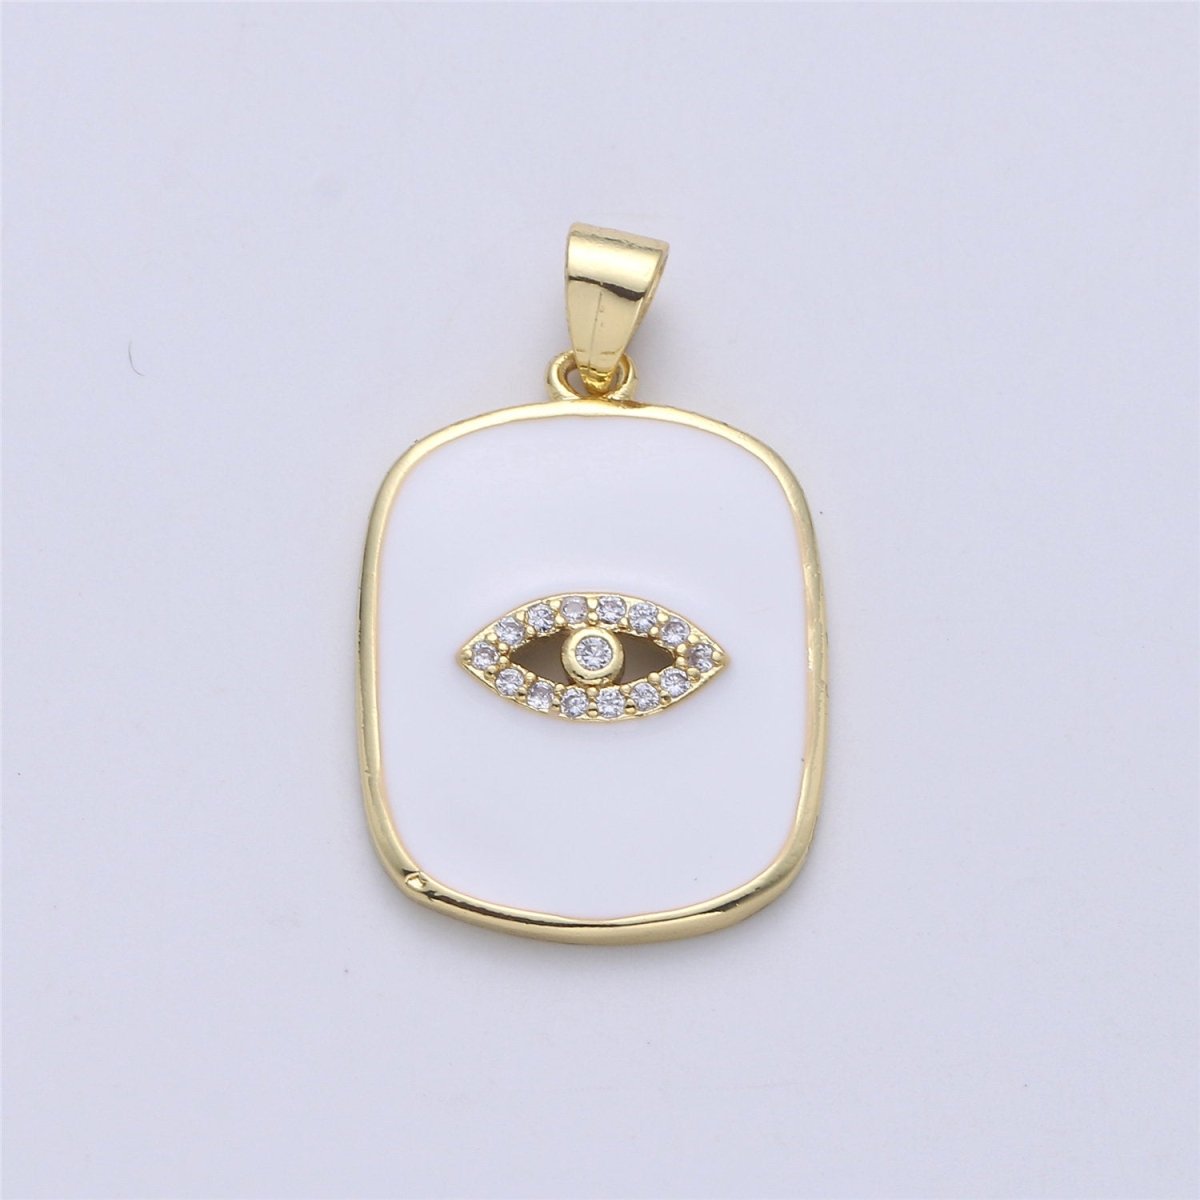 Gold Enamel Evil Eye Charm Tag Pendant, Black White Eye of Ra charm, Enamel Jewelry for Necklace Component I-452 I-453 - DLUXCA